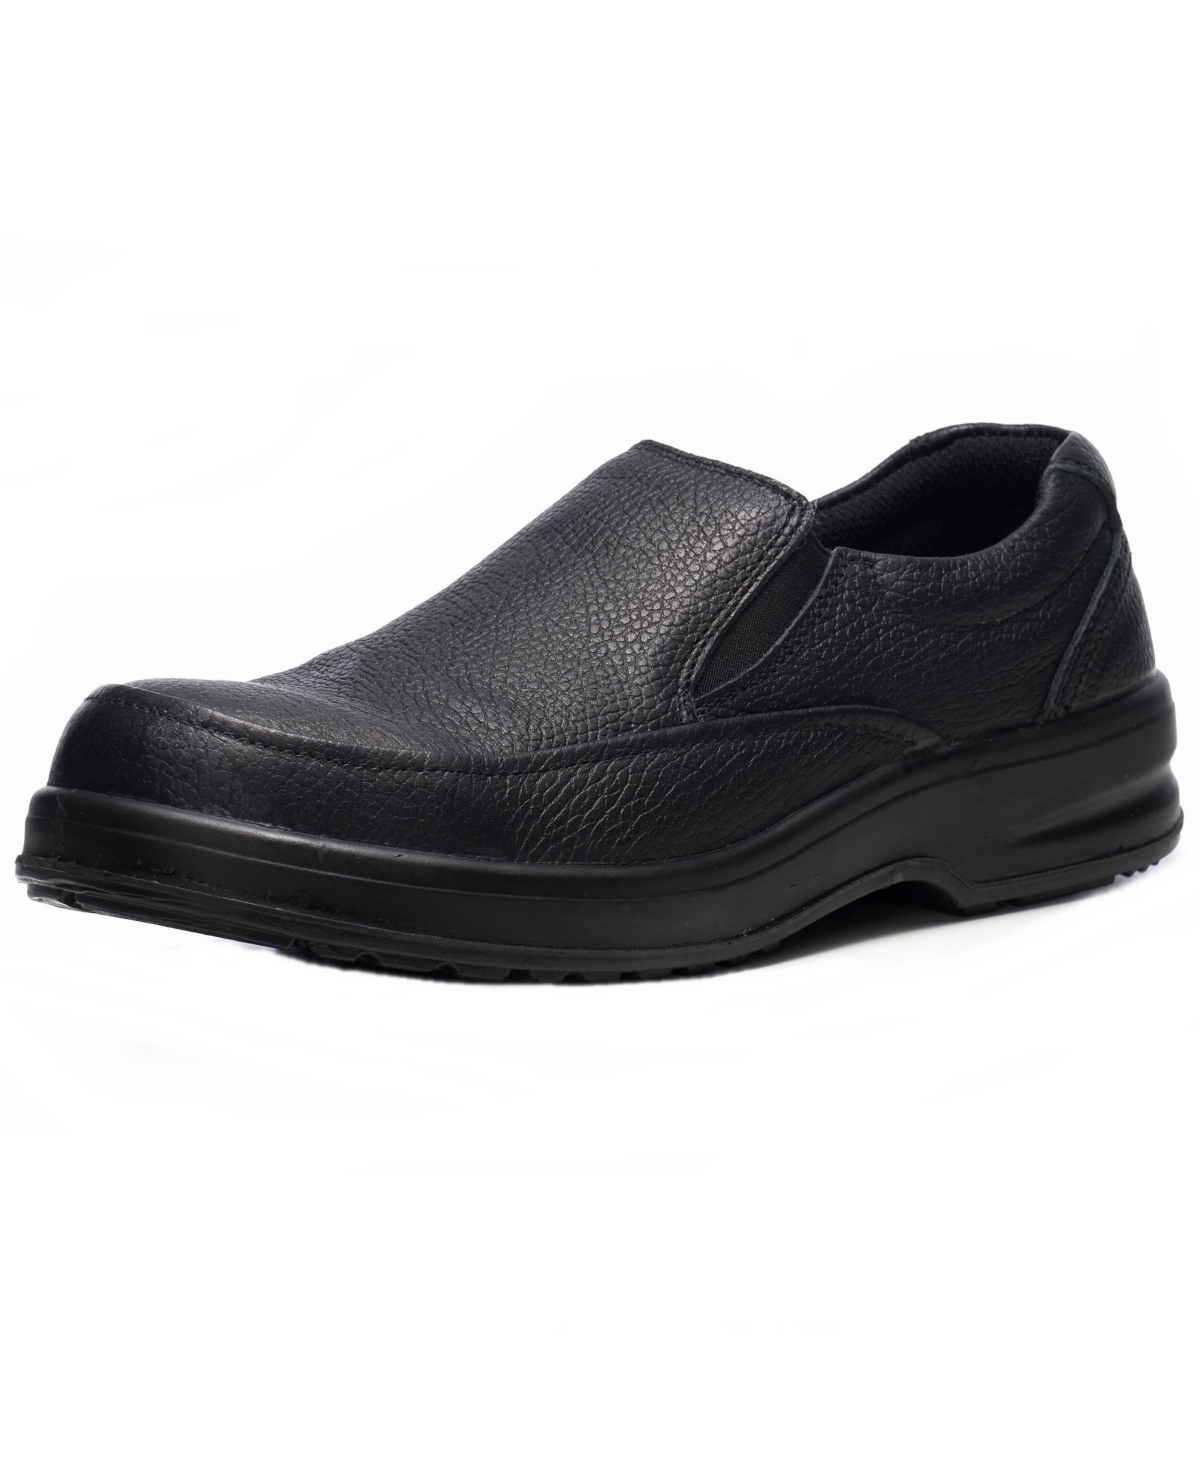 Arbete Mens Work Shoes Slip Resistant Real Leather Slip-On Loafers - Black